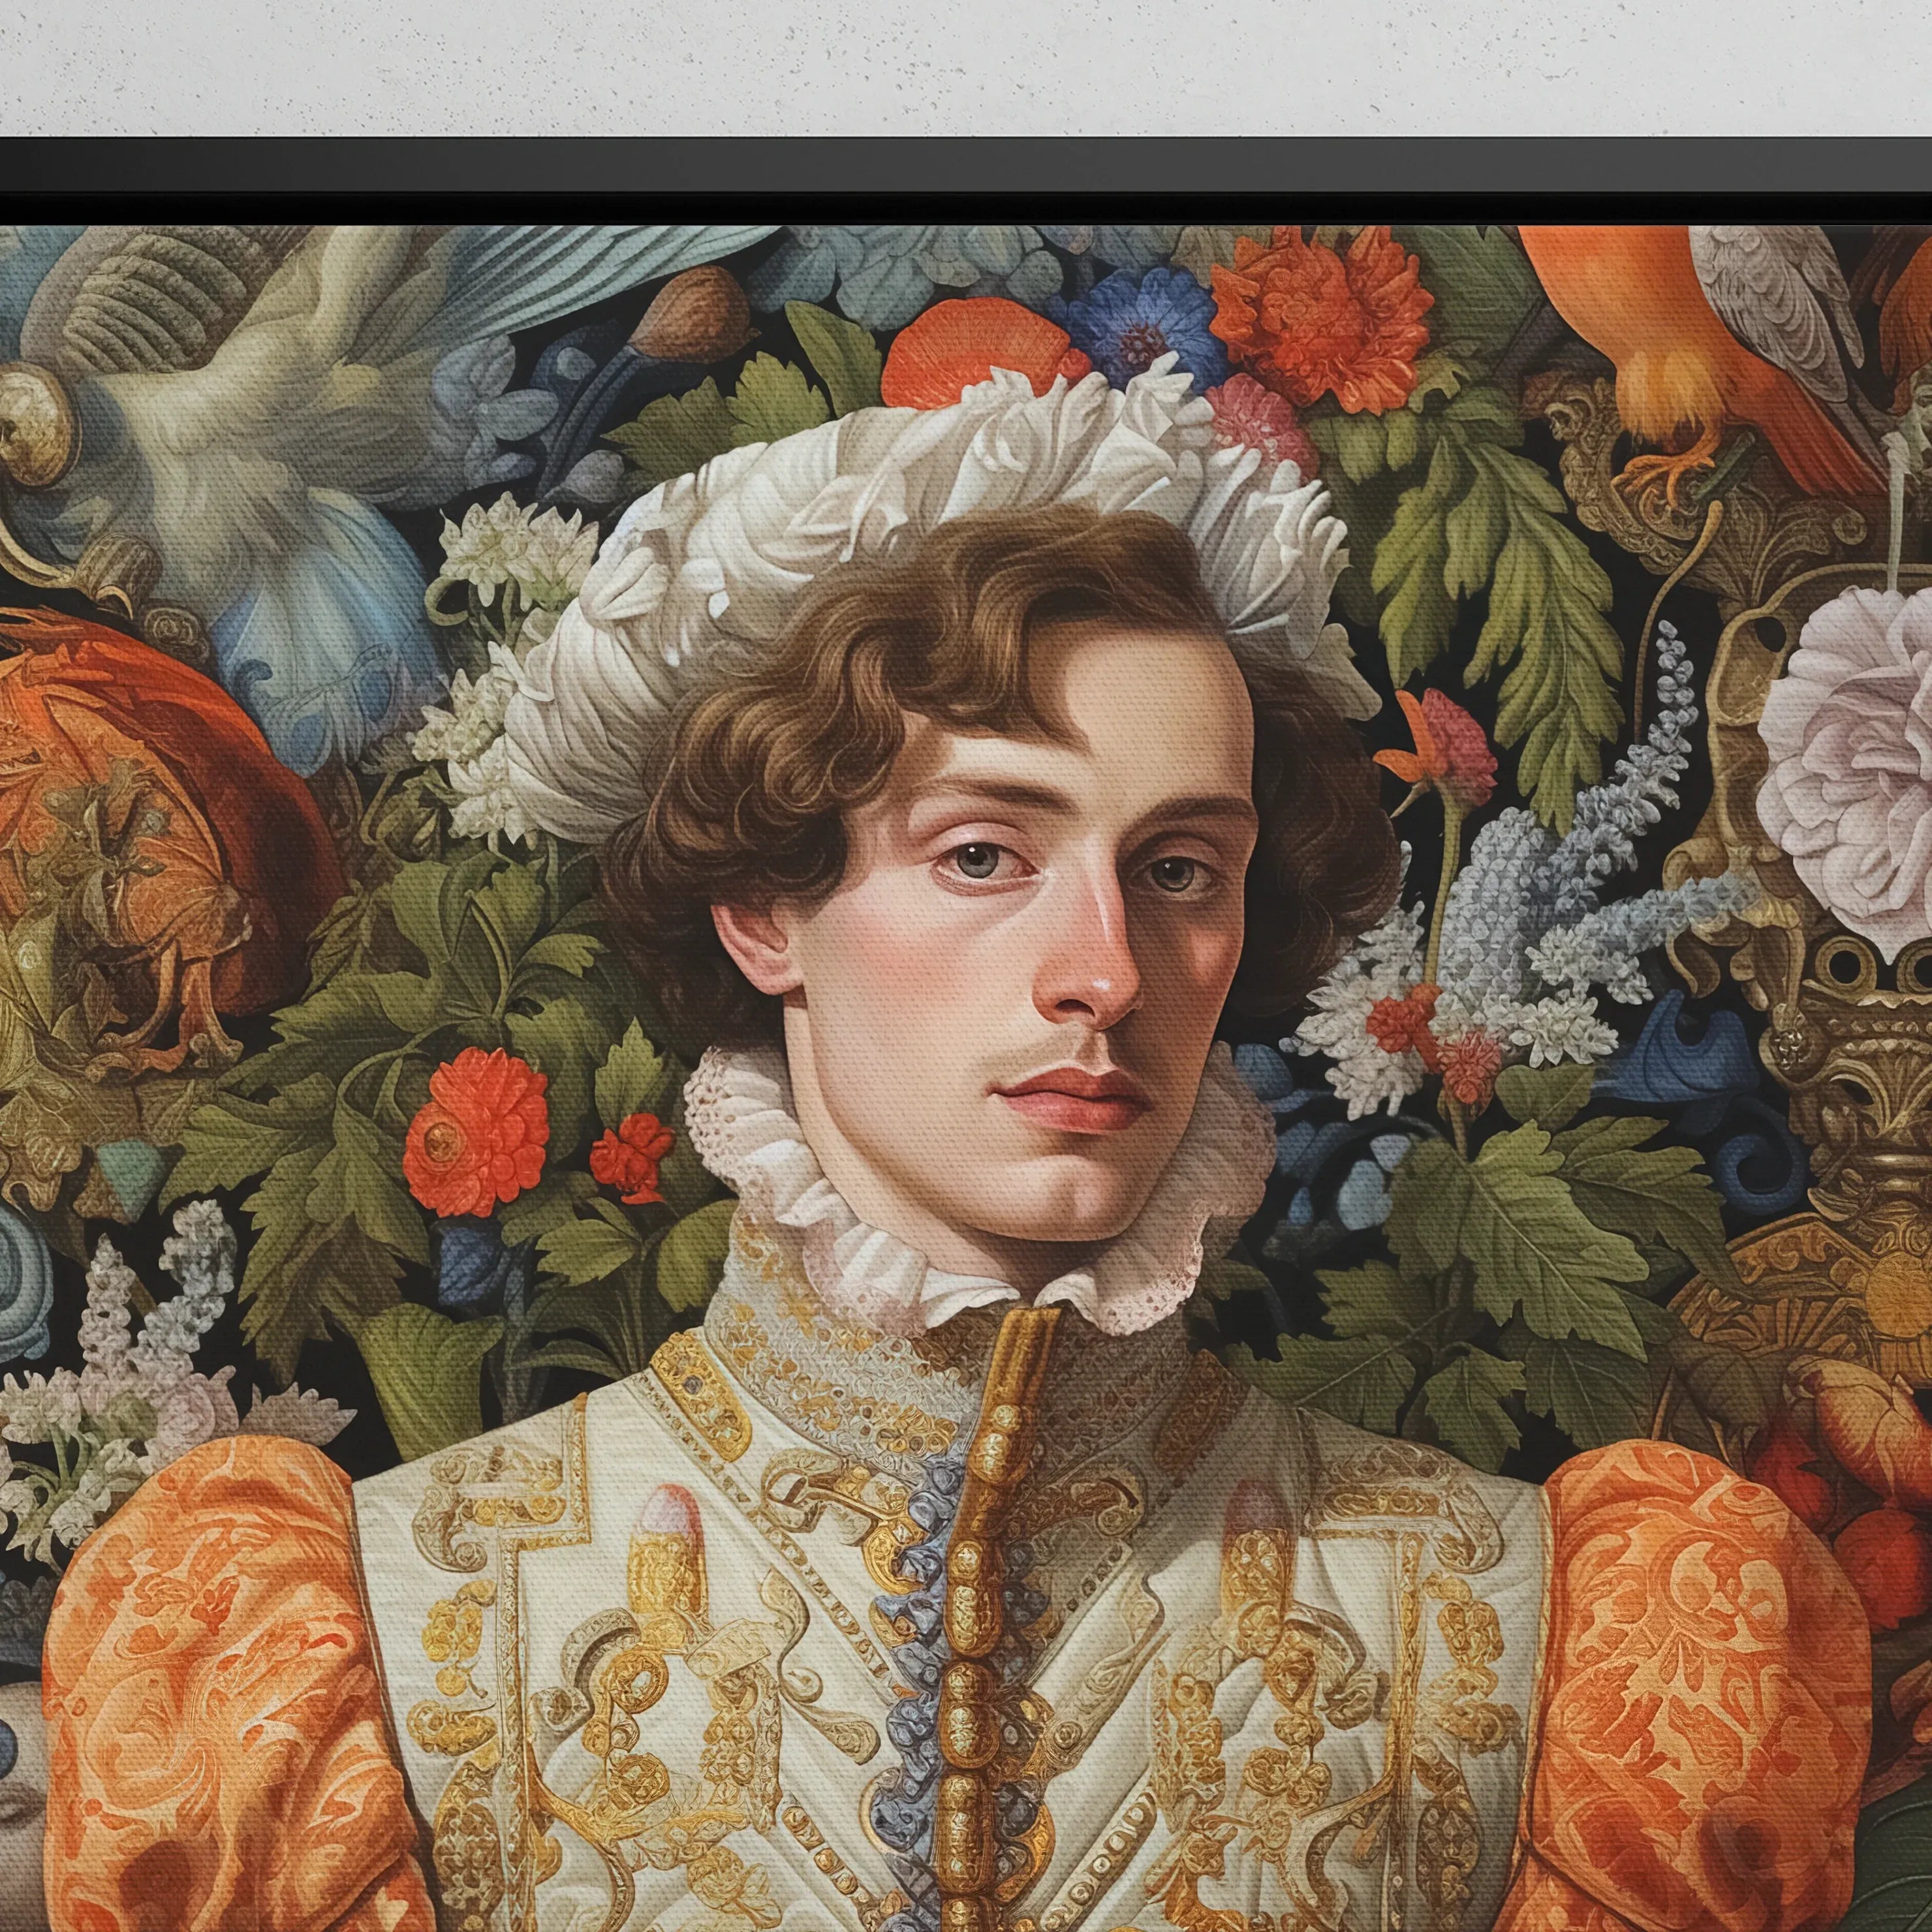 Prince Hugo - Gay German Royalty Renaissance Queerart Canvas - Posters Prints & Visual Artwork - Aesthetic Art